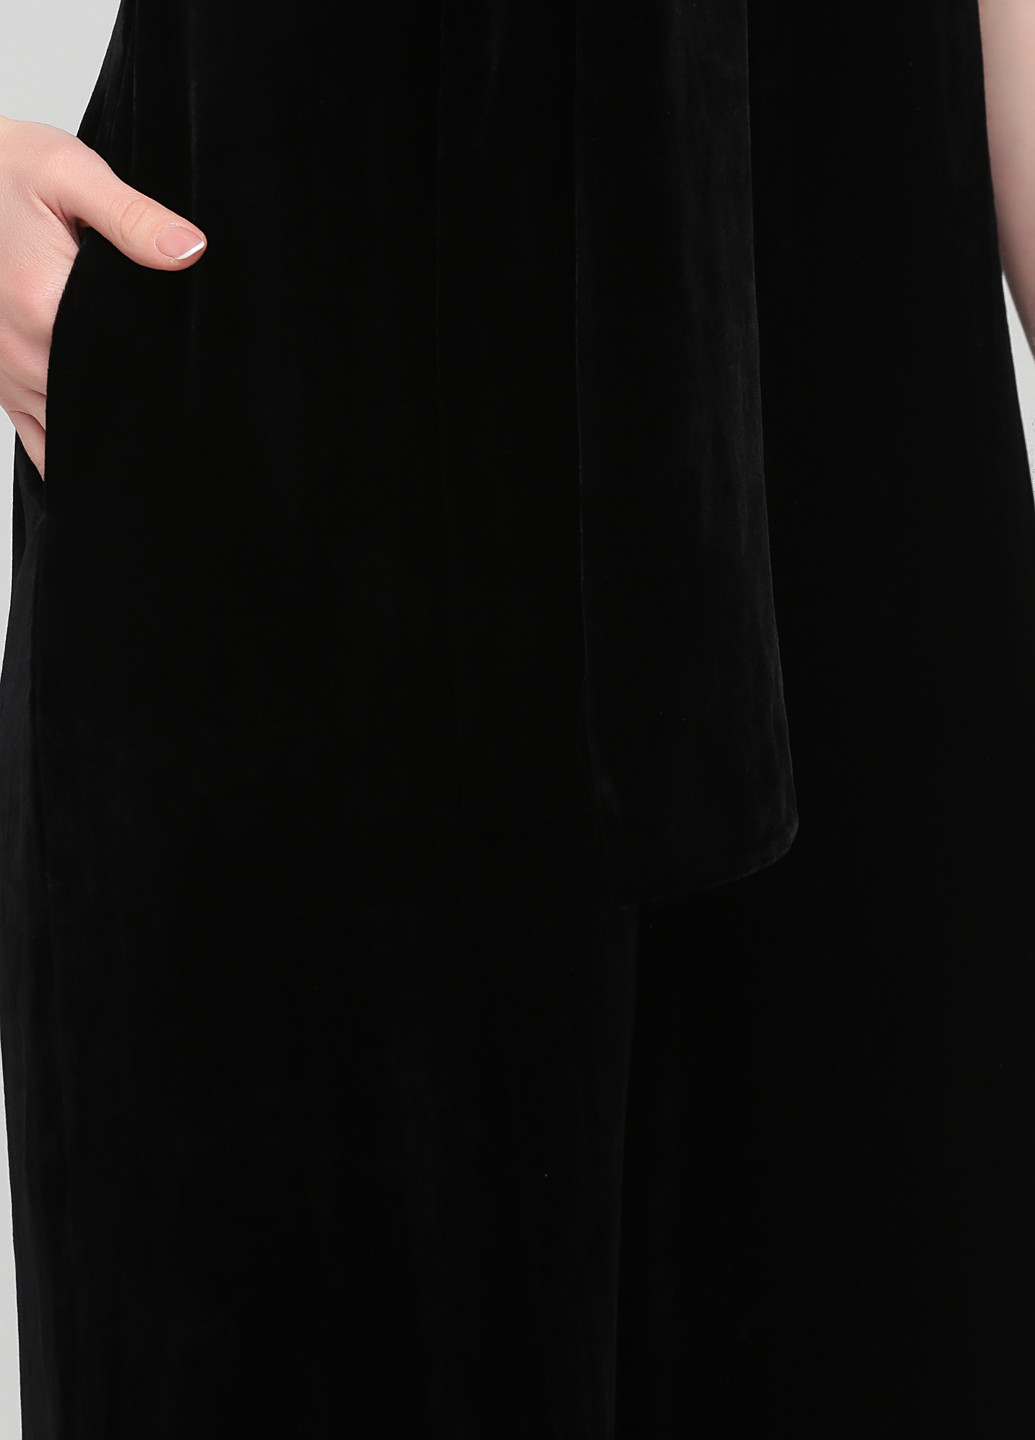 Комбинезон Massimo Dutti комбинезон-брюки однотонный чёрный вечерний вискоза, велюр, шелк